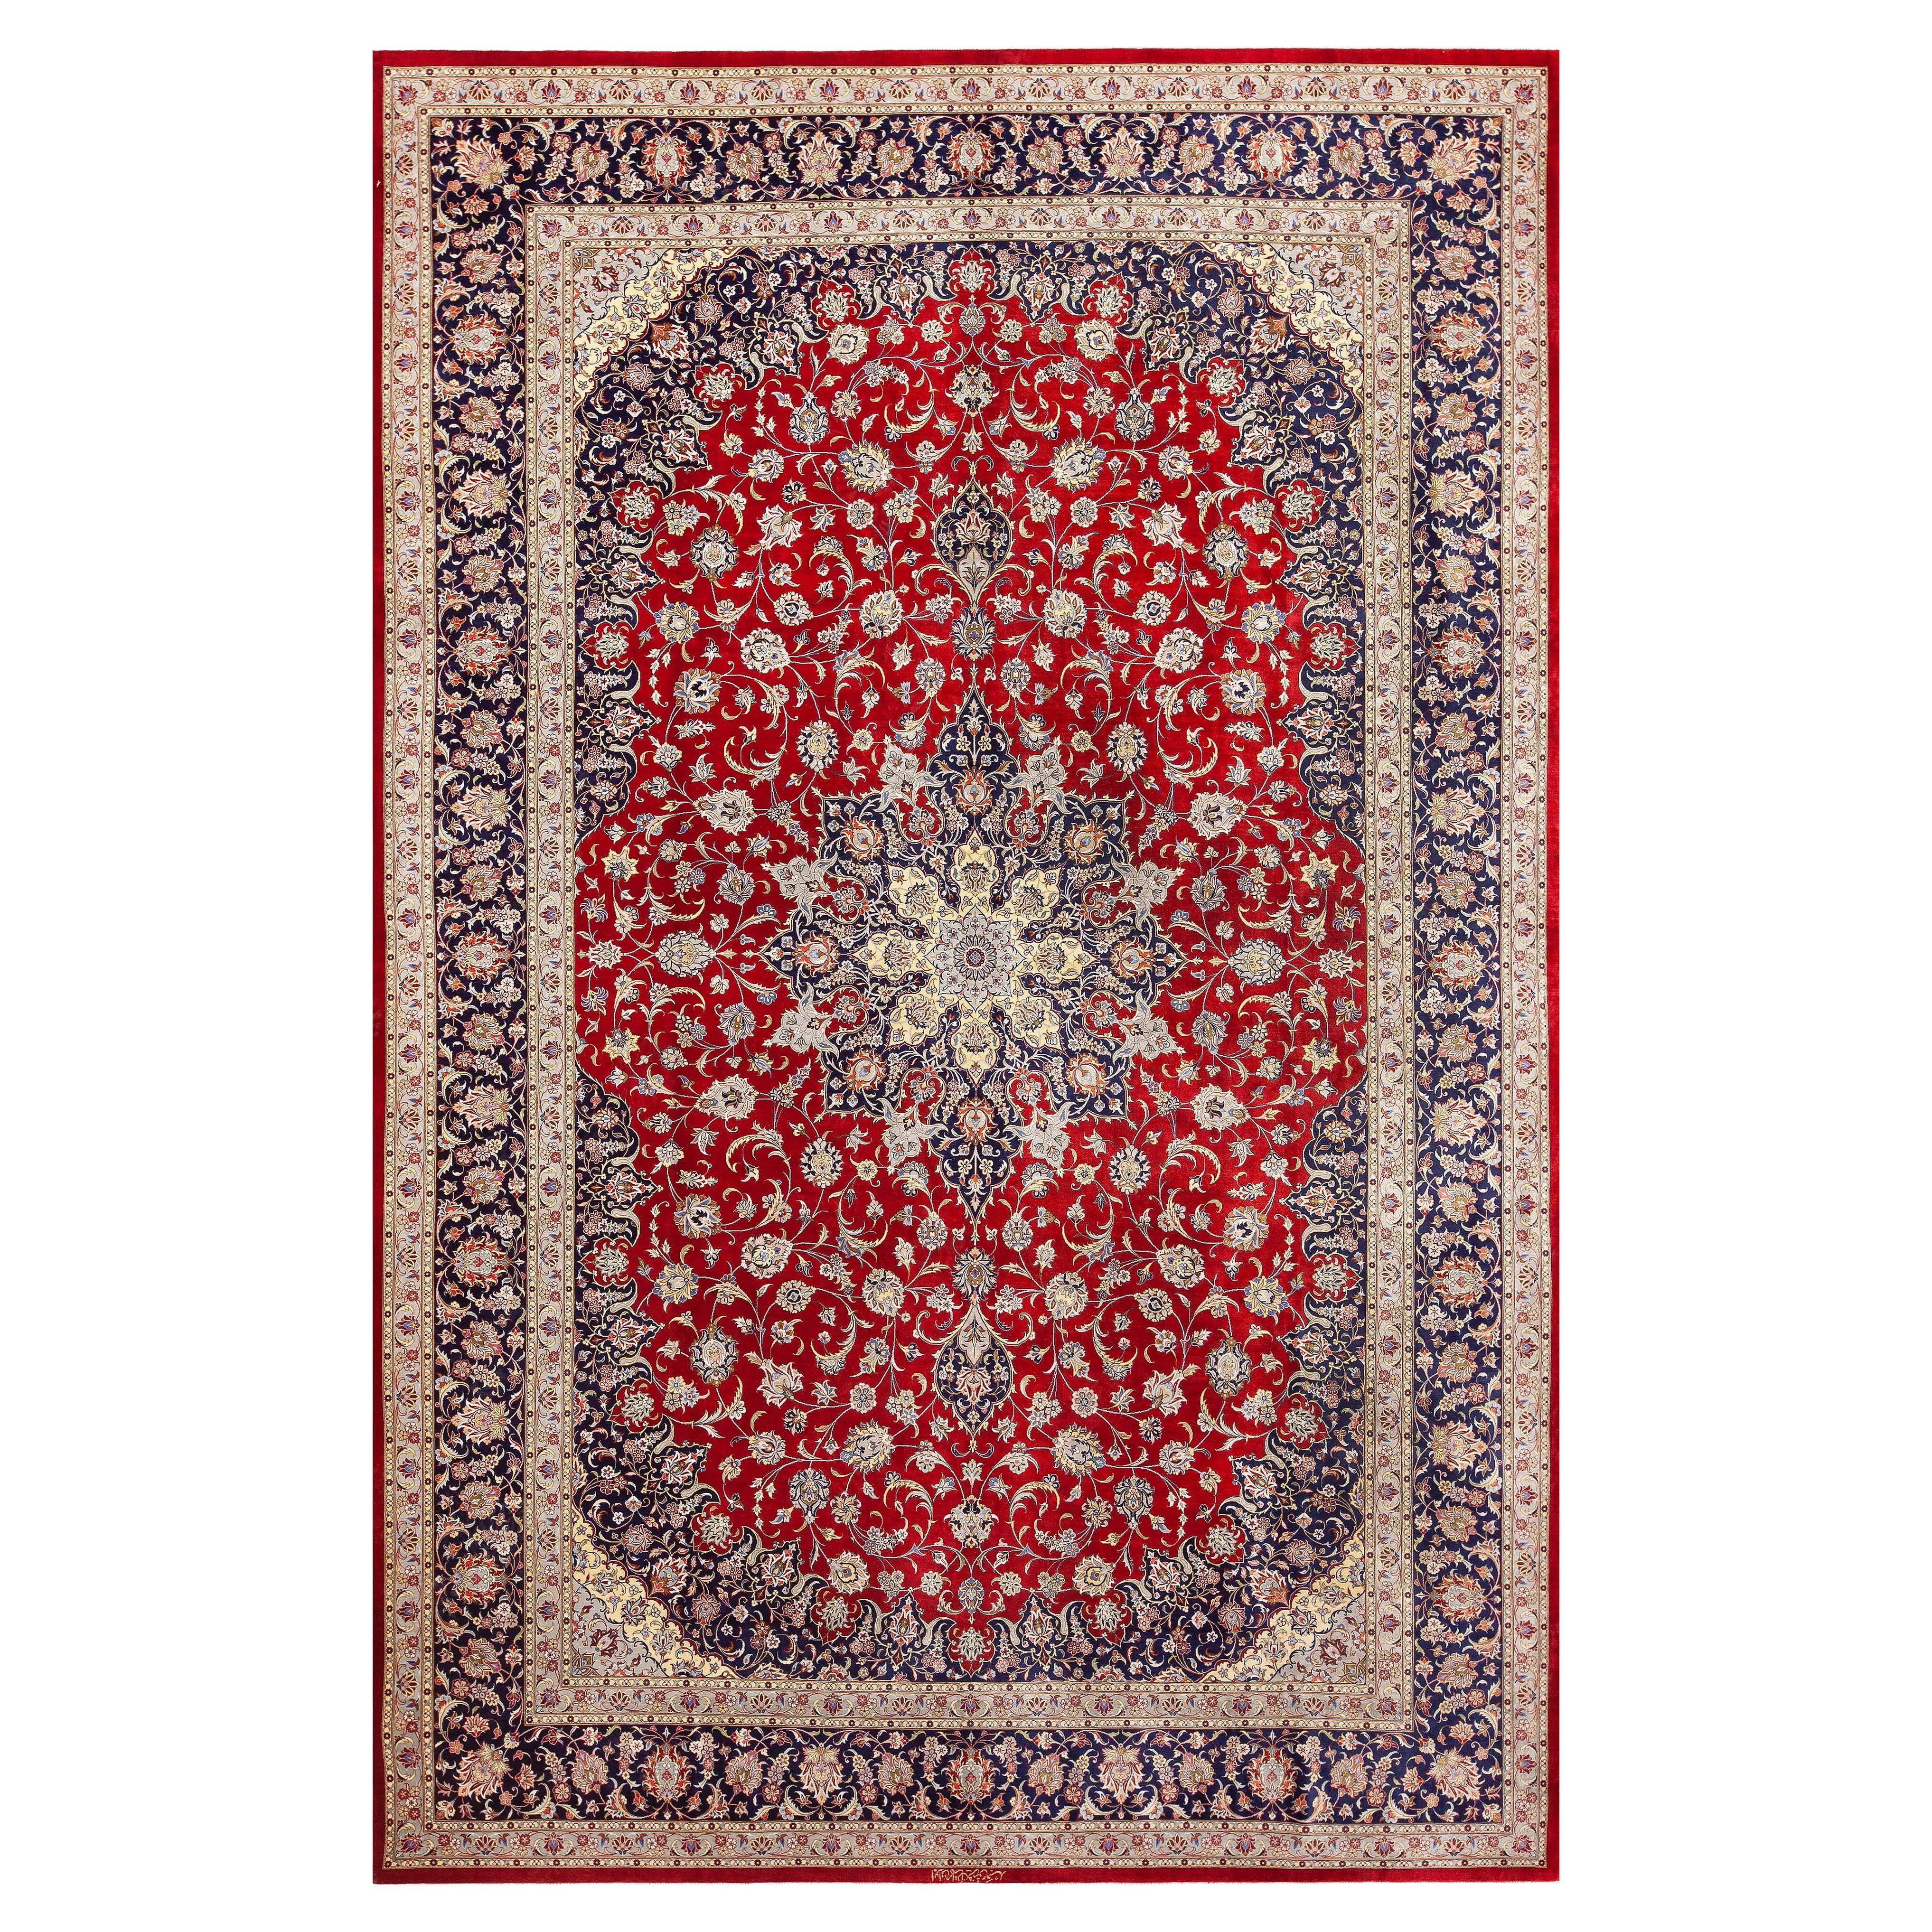 Atemberaubende Fine Floral Luxurious Vintage Persian Silk Kashan Teppich 6'7" x 10'2"